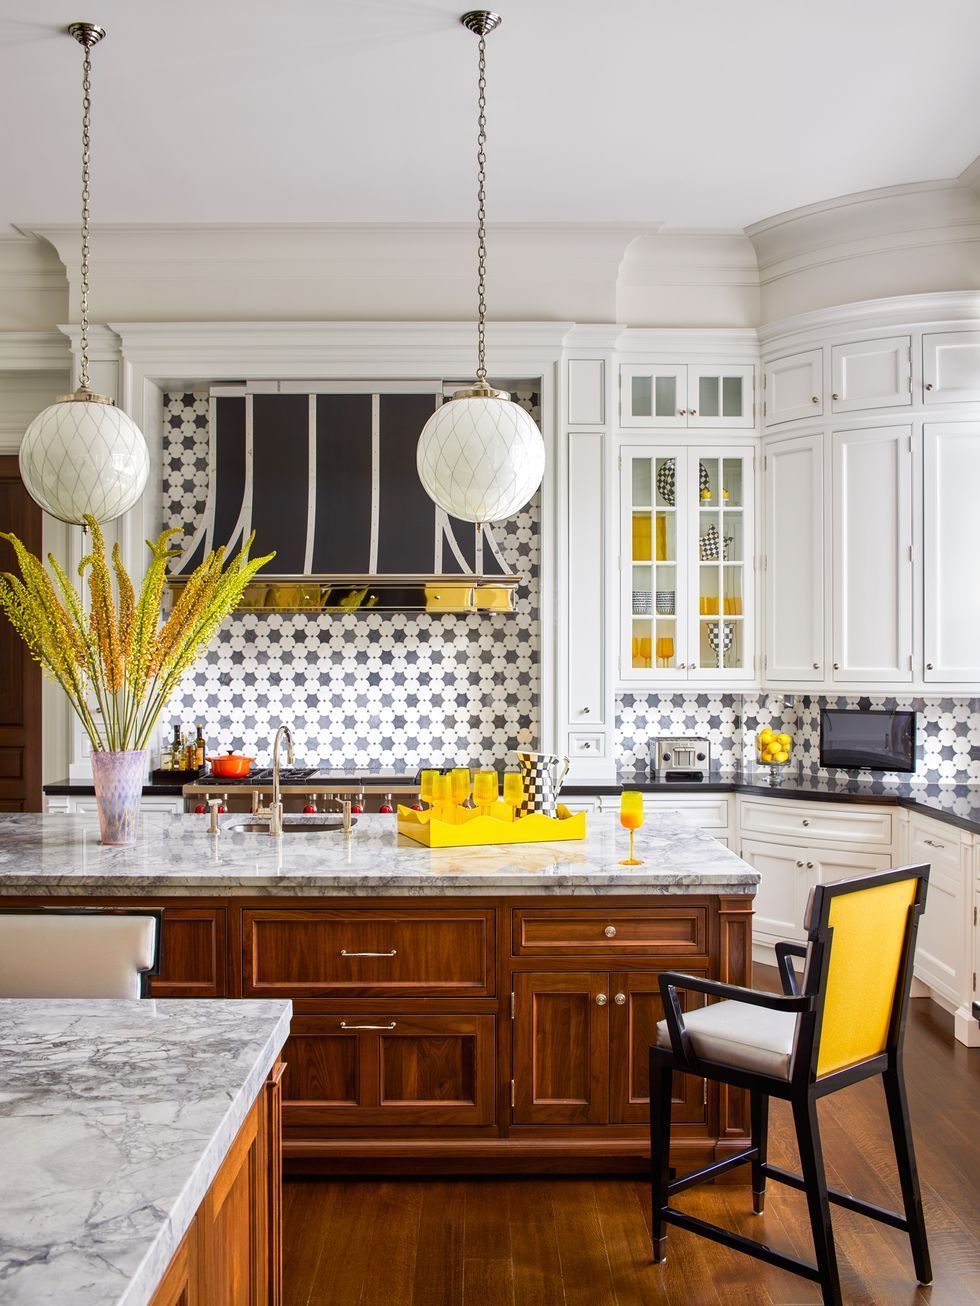 51 Gorgeous Kitchen Backsplash Ideas, Tile Backsplash